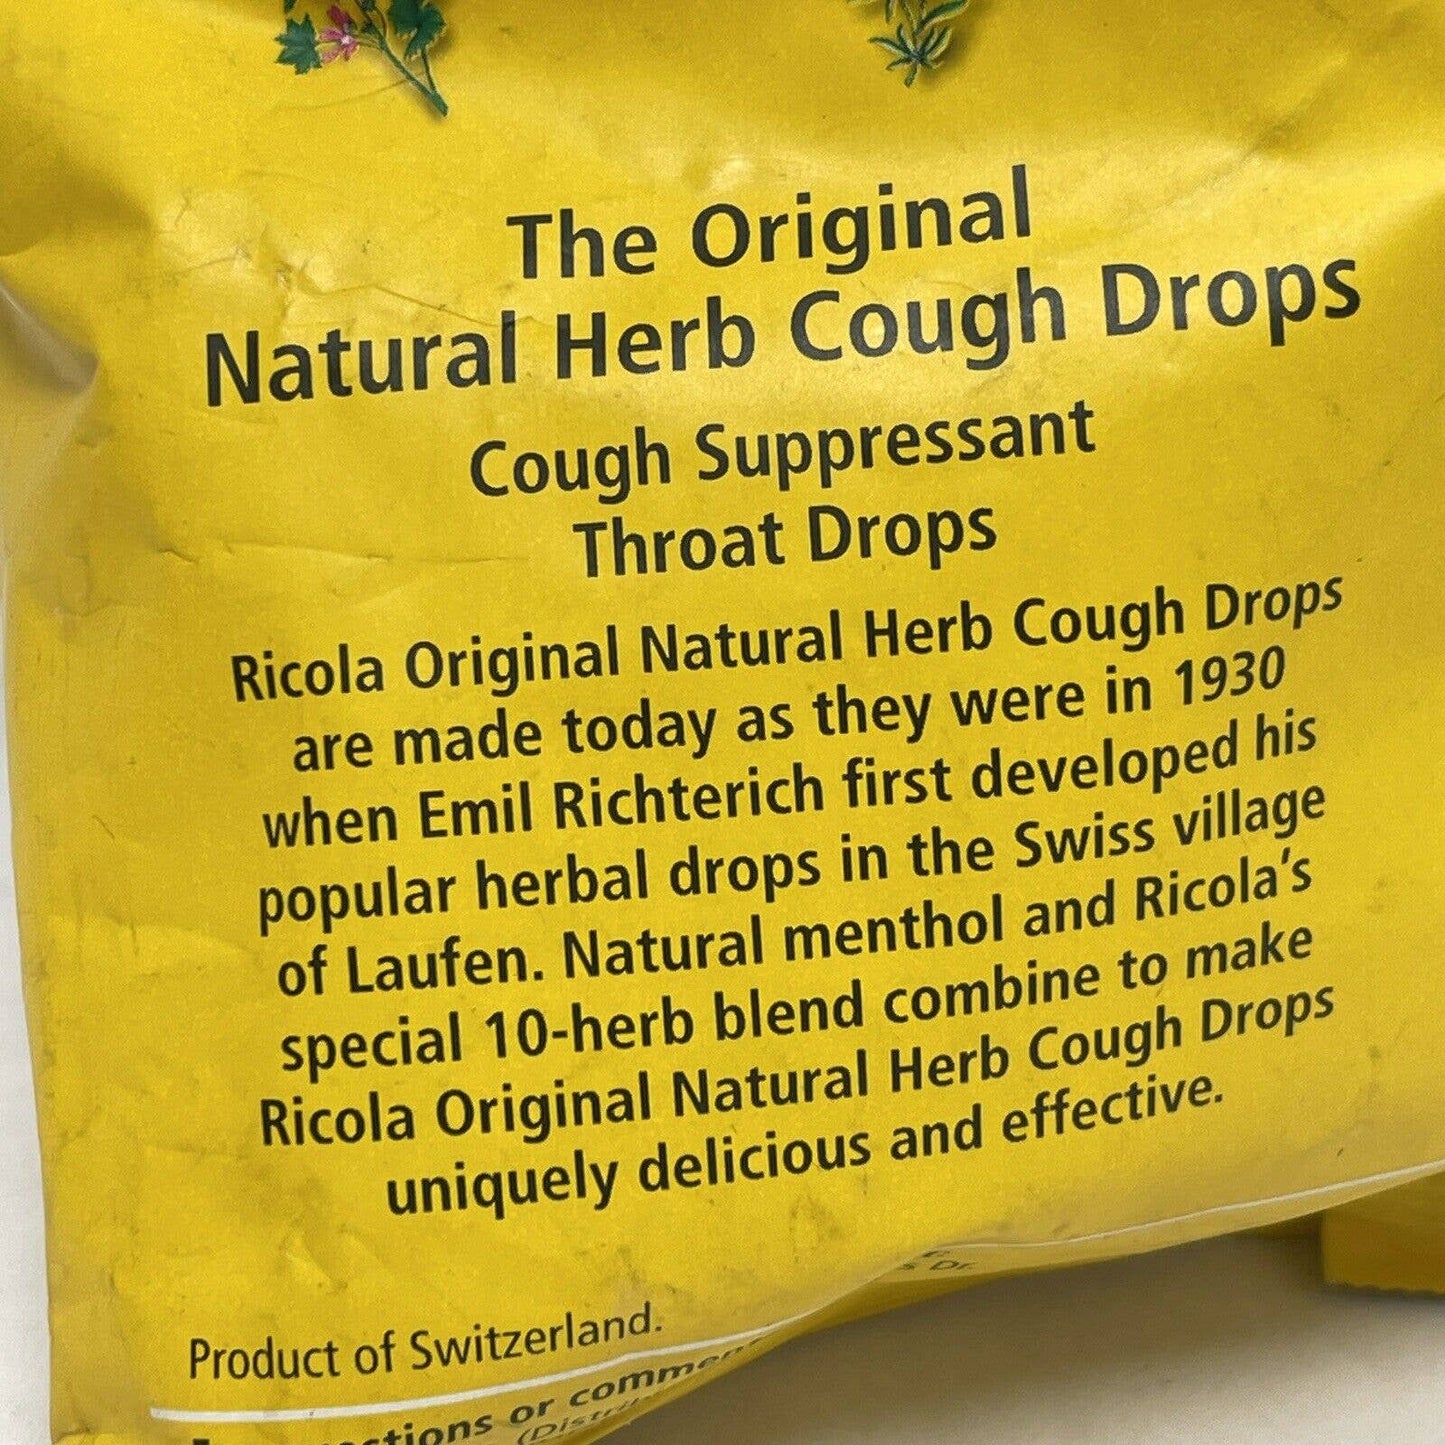 Ricola Original Natural Herb Cough Drops (130 ct.)